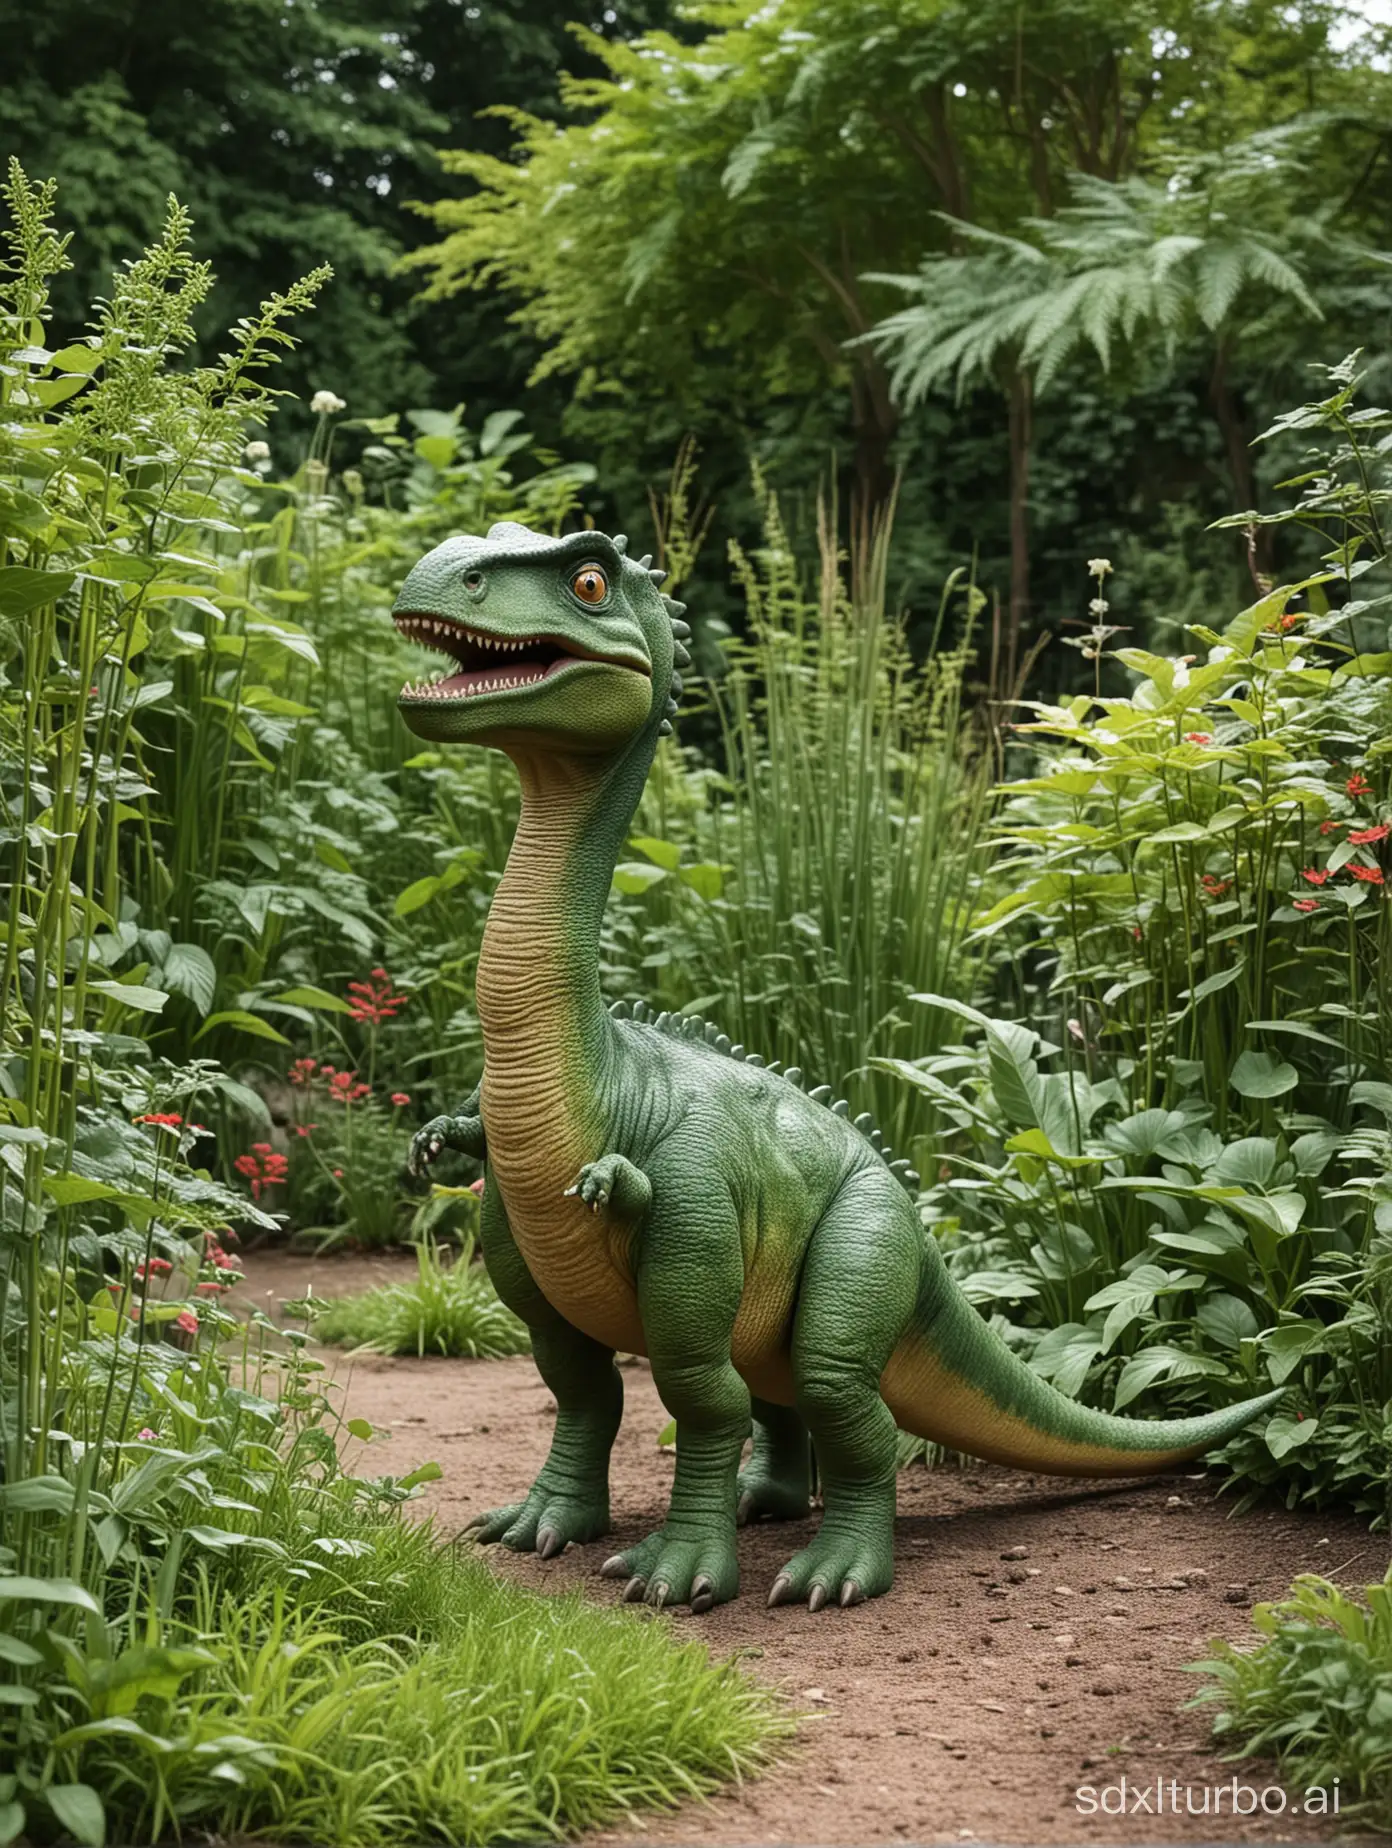 Beautiful-Dinosaur-Sculpture-Adorning-a-Garden-Oasis